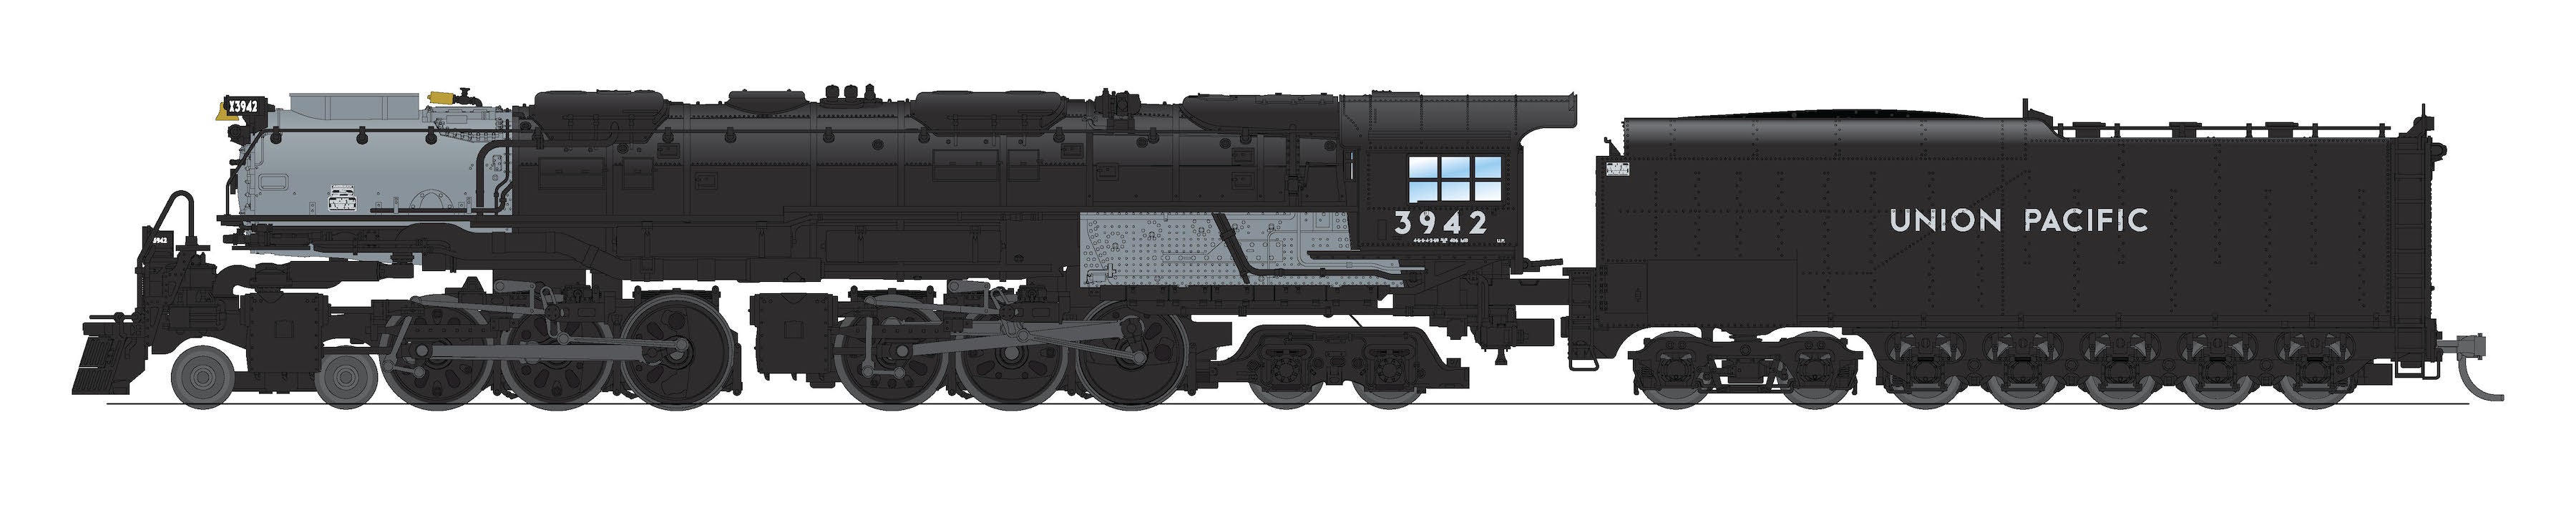 6981 UP Challenger 4-6-6-4, #3954, Black & Graphite, Coal Tender, Paragon4 Sound/DC/DCC, Smoke, N